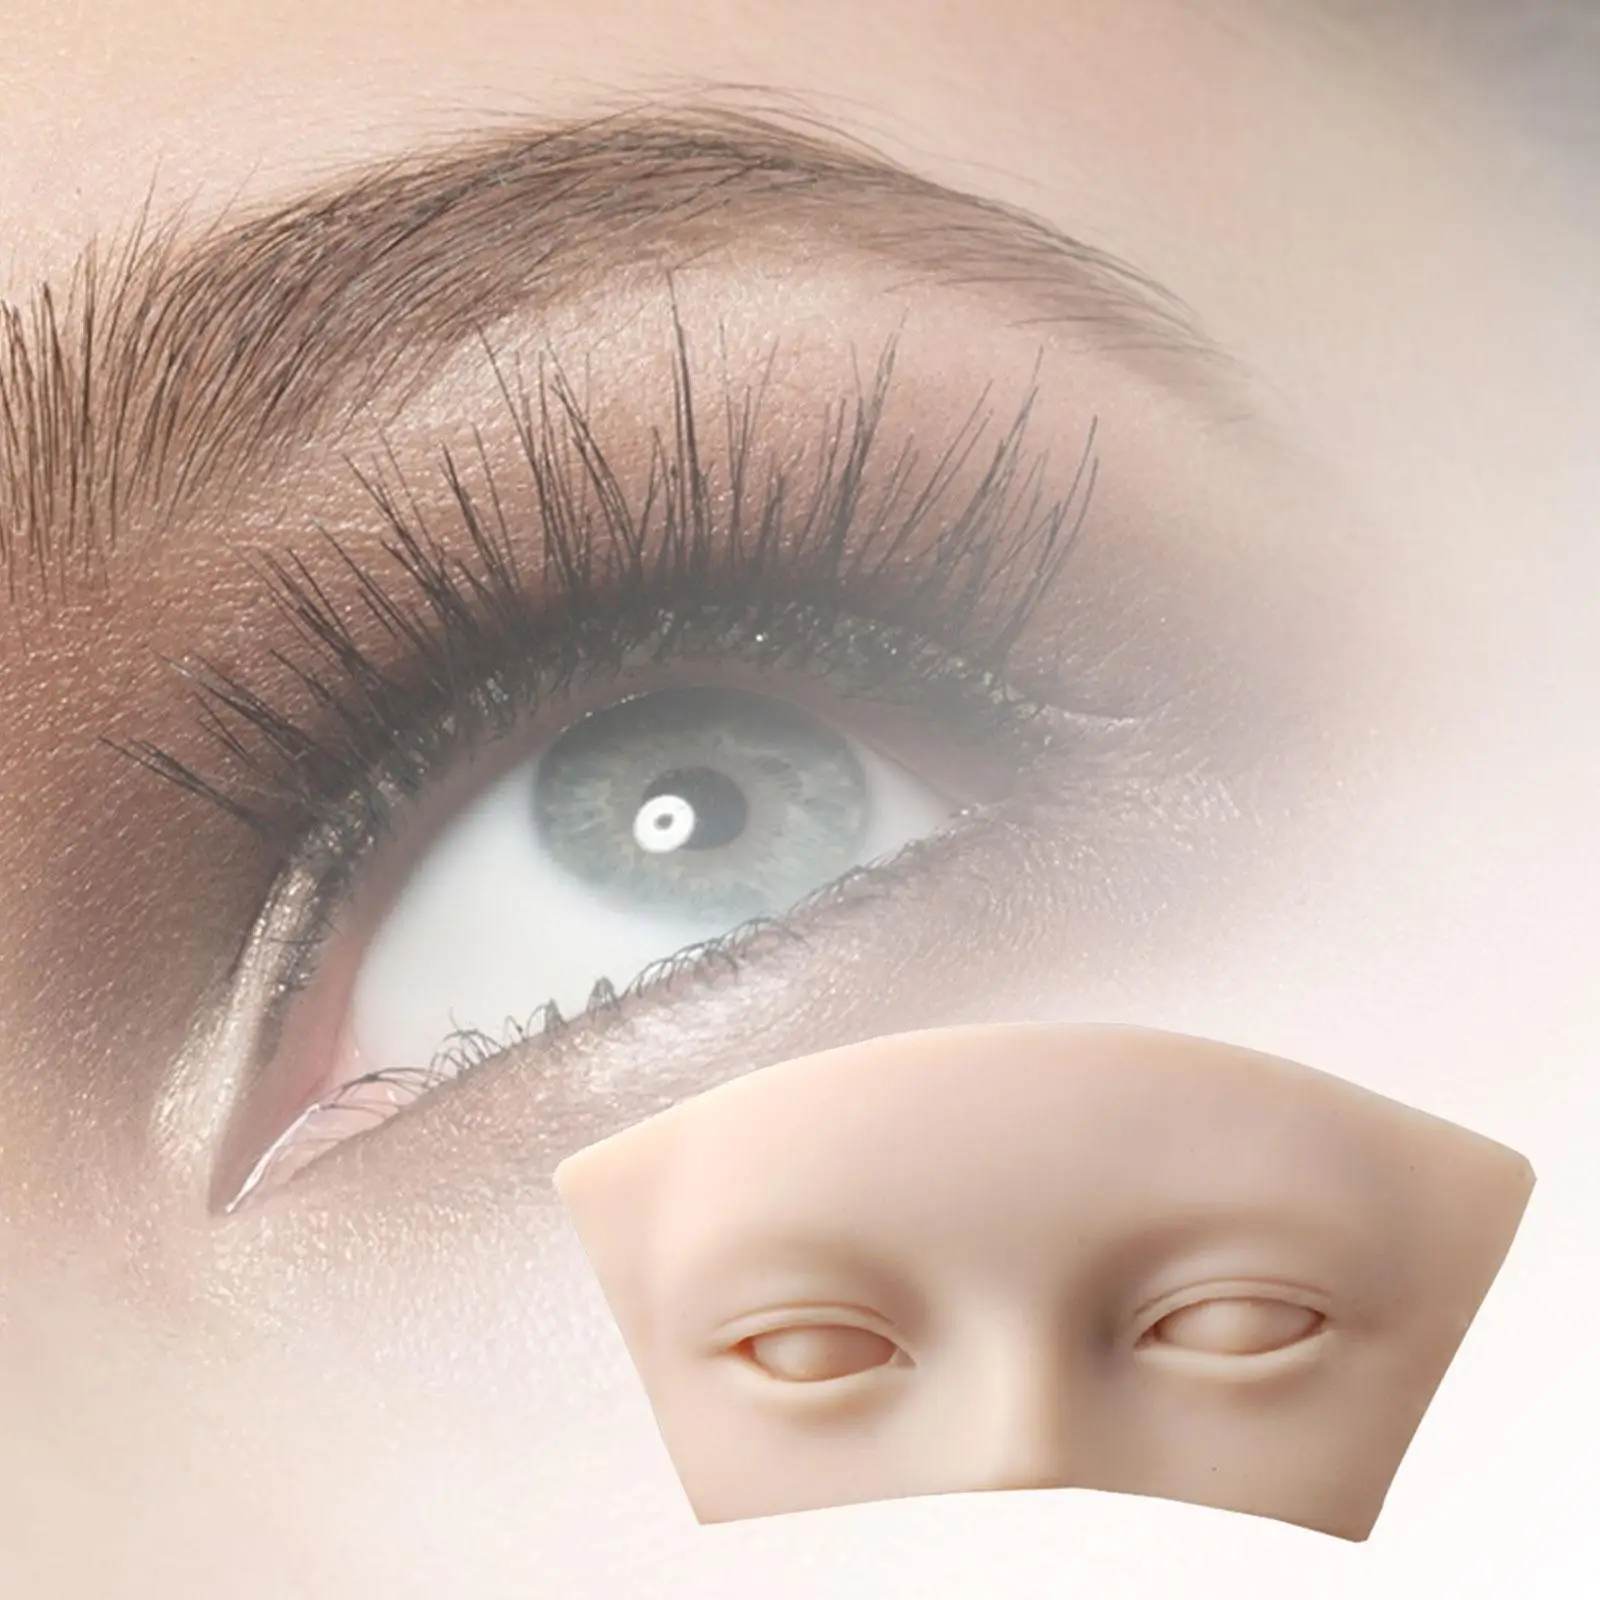 Multifunction Training Board Durable Eye Makeup Practice Aid Beautician